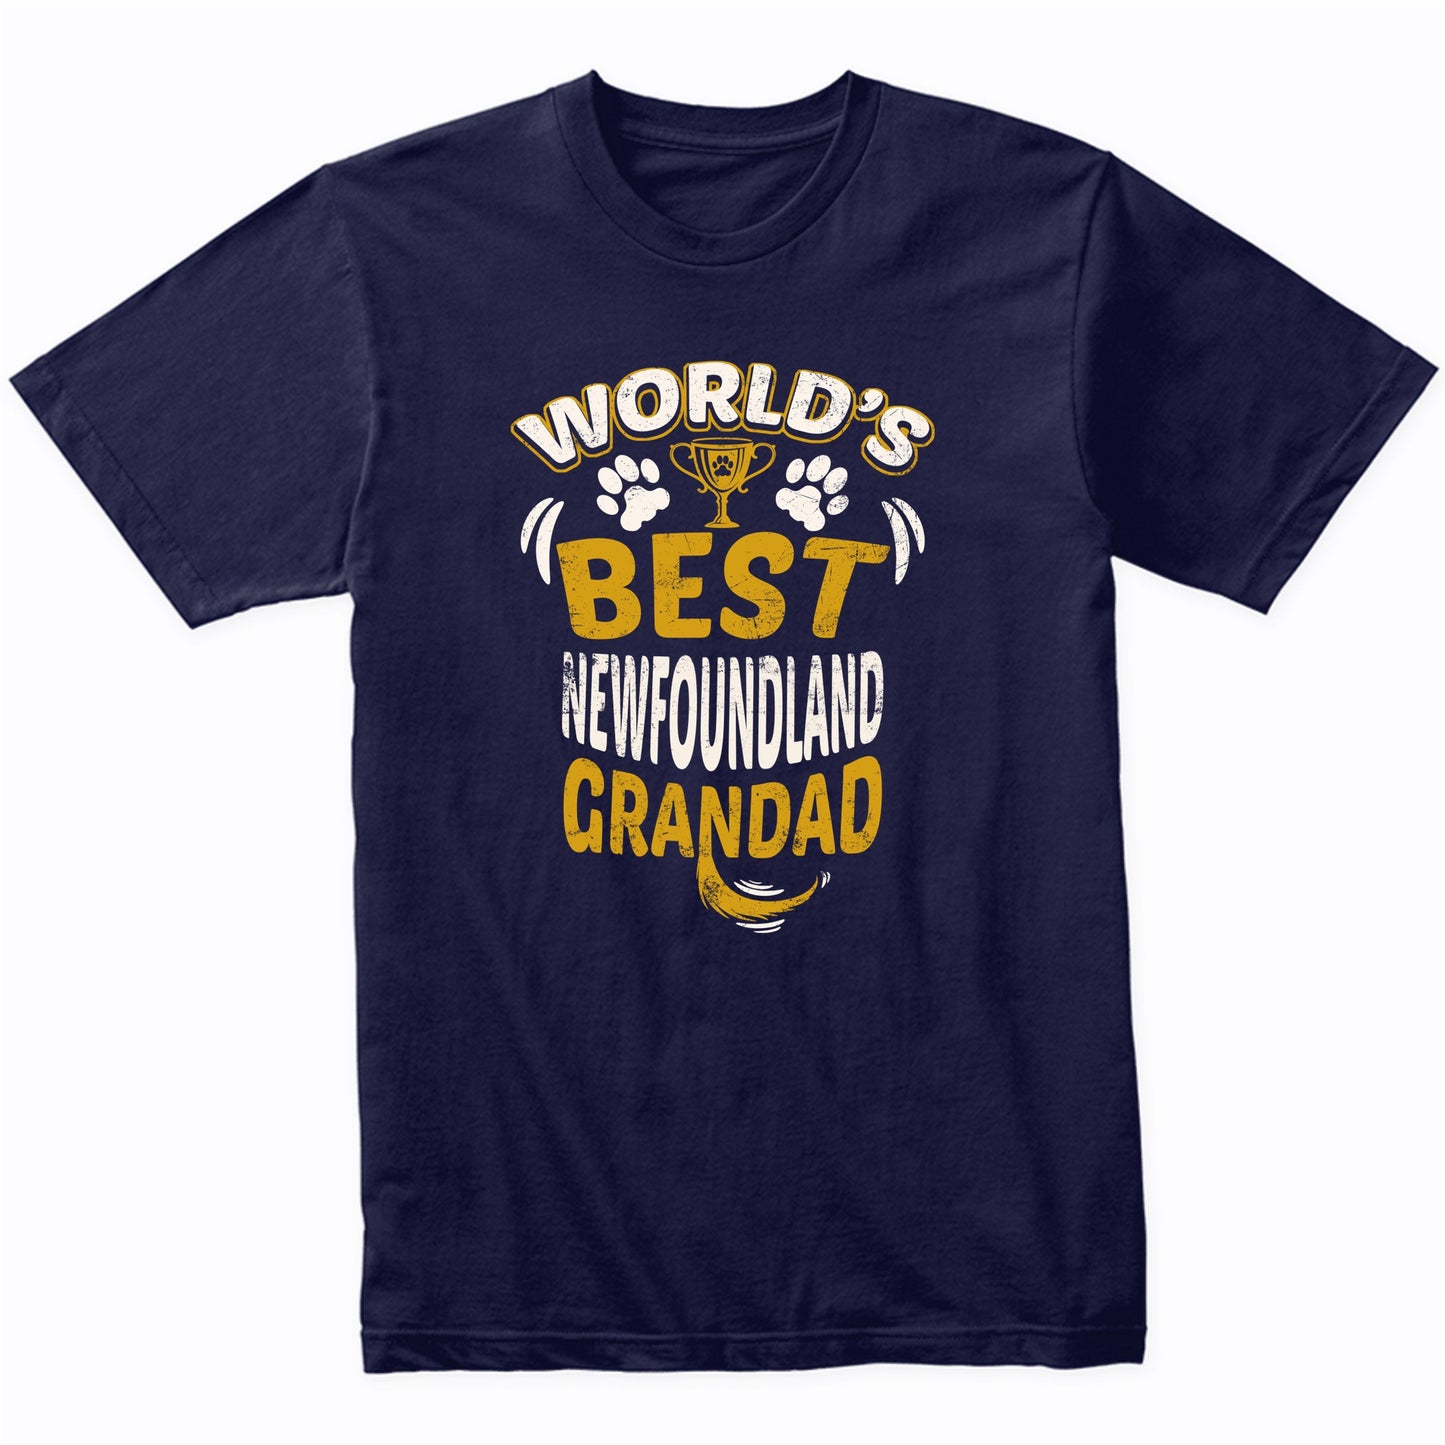 World's Best Newfoundland Grandad Graphic T-Shirt